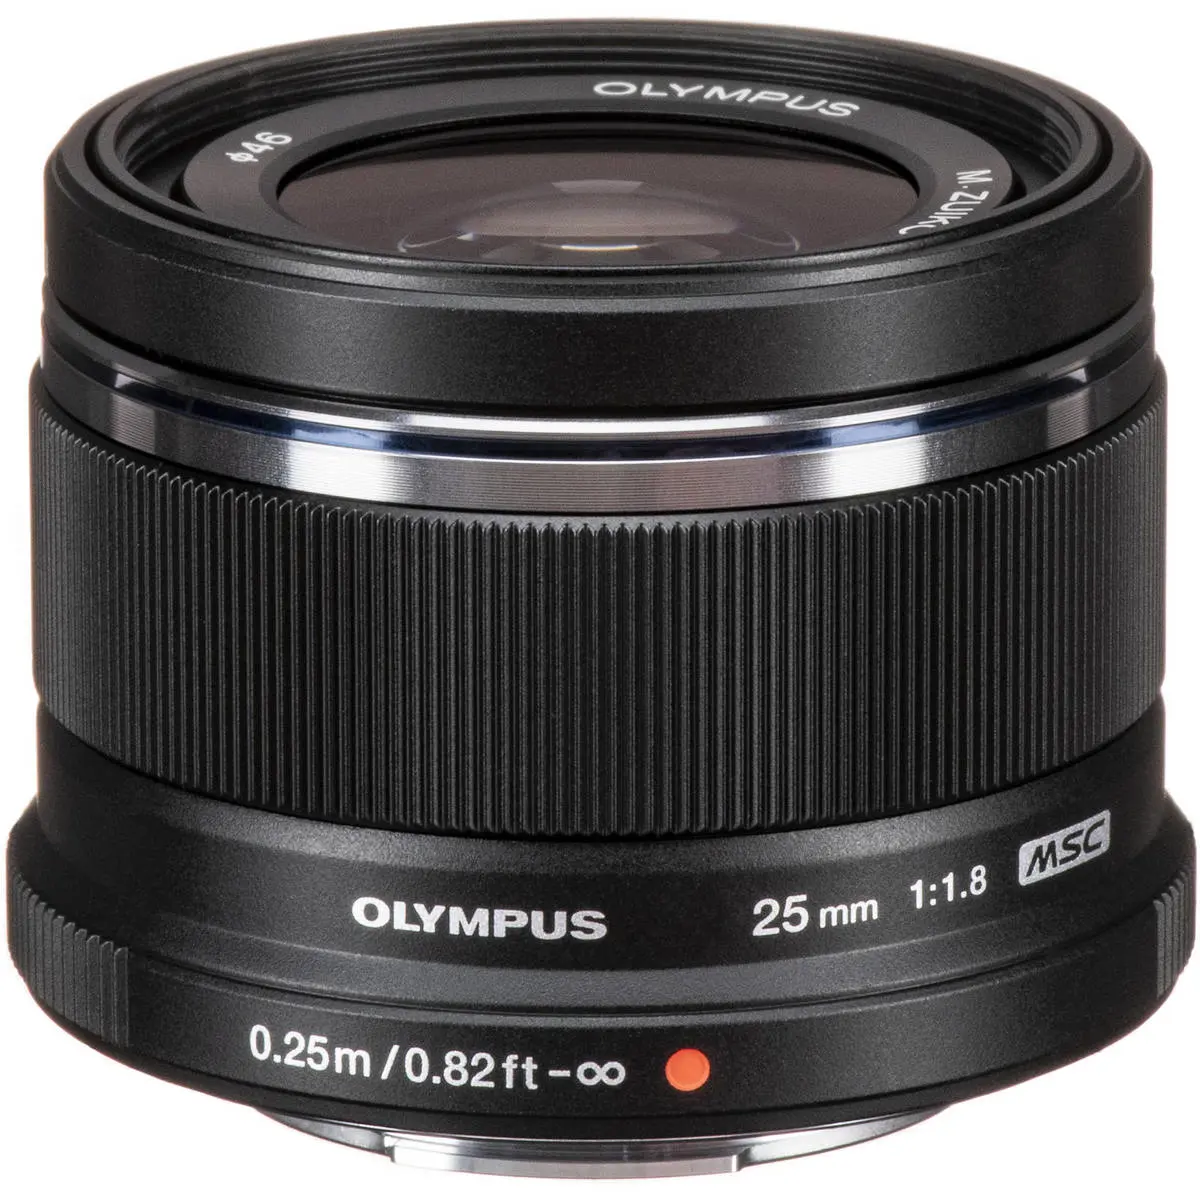 Main Image Olympus M.ZUIKO DIGITAL 25mm F1.8 (Black)